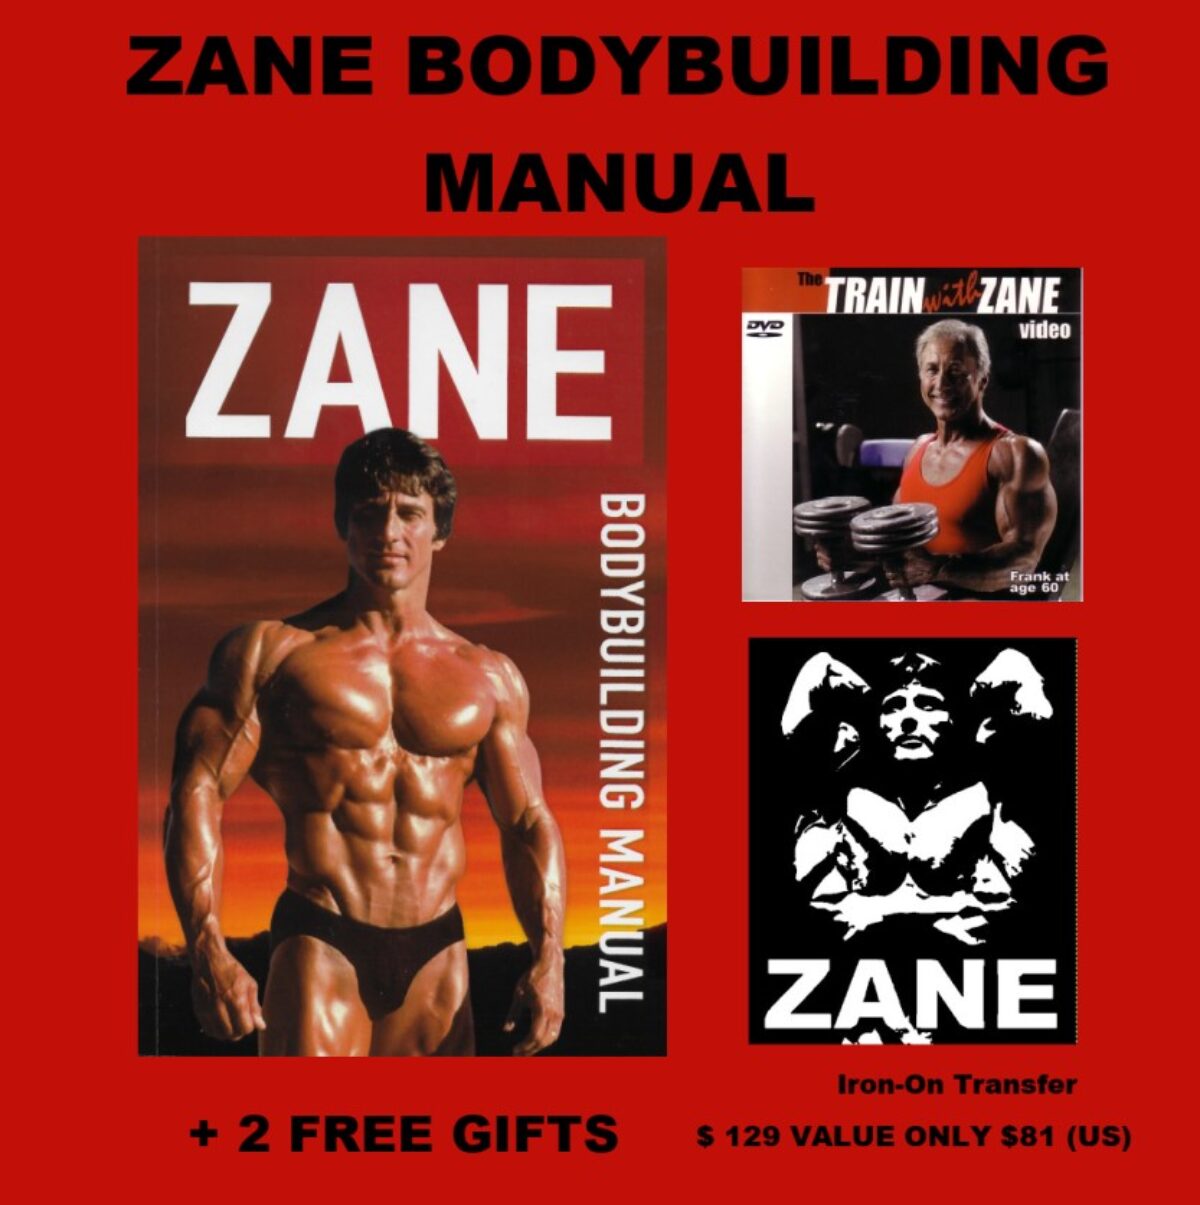 Zane Bodybuilding Manual + 2 FREE Gifts (DVD +Iron-On Transfer)